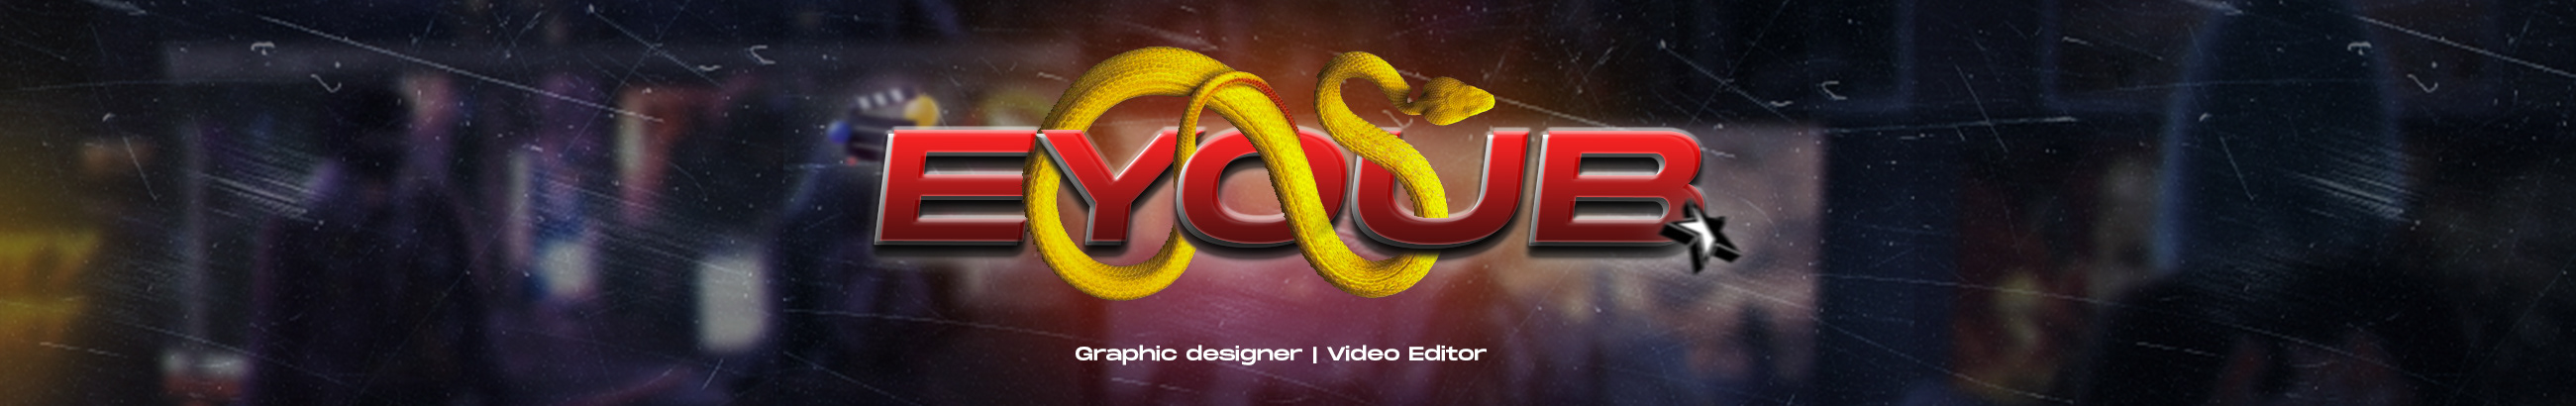 Eyoub Design's profile banner